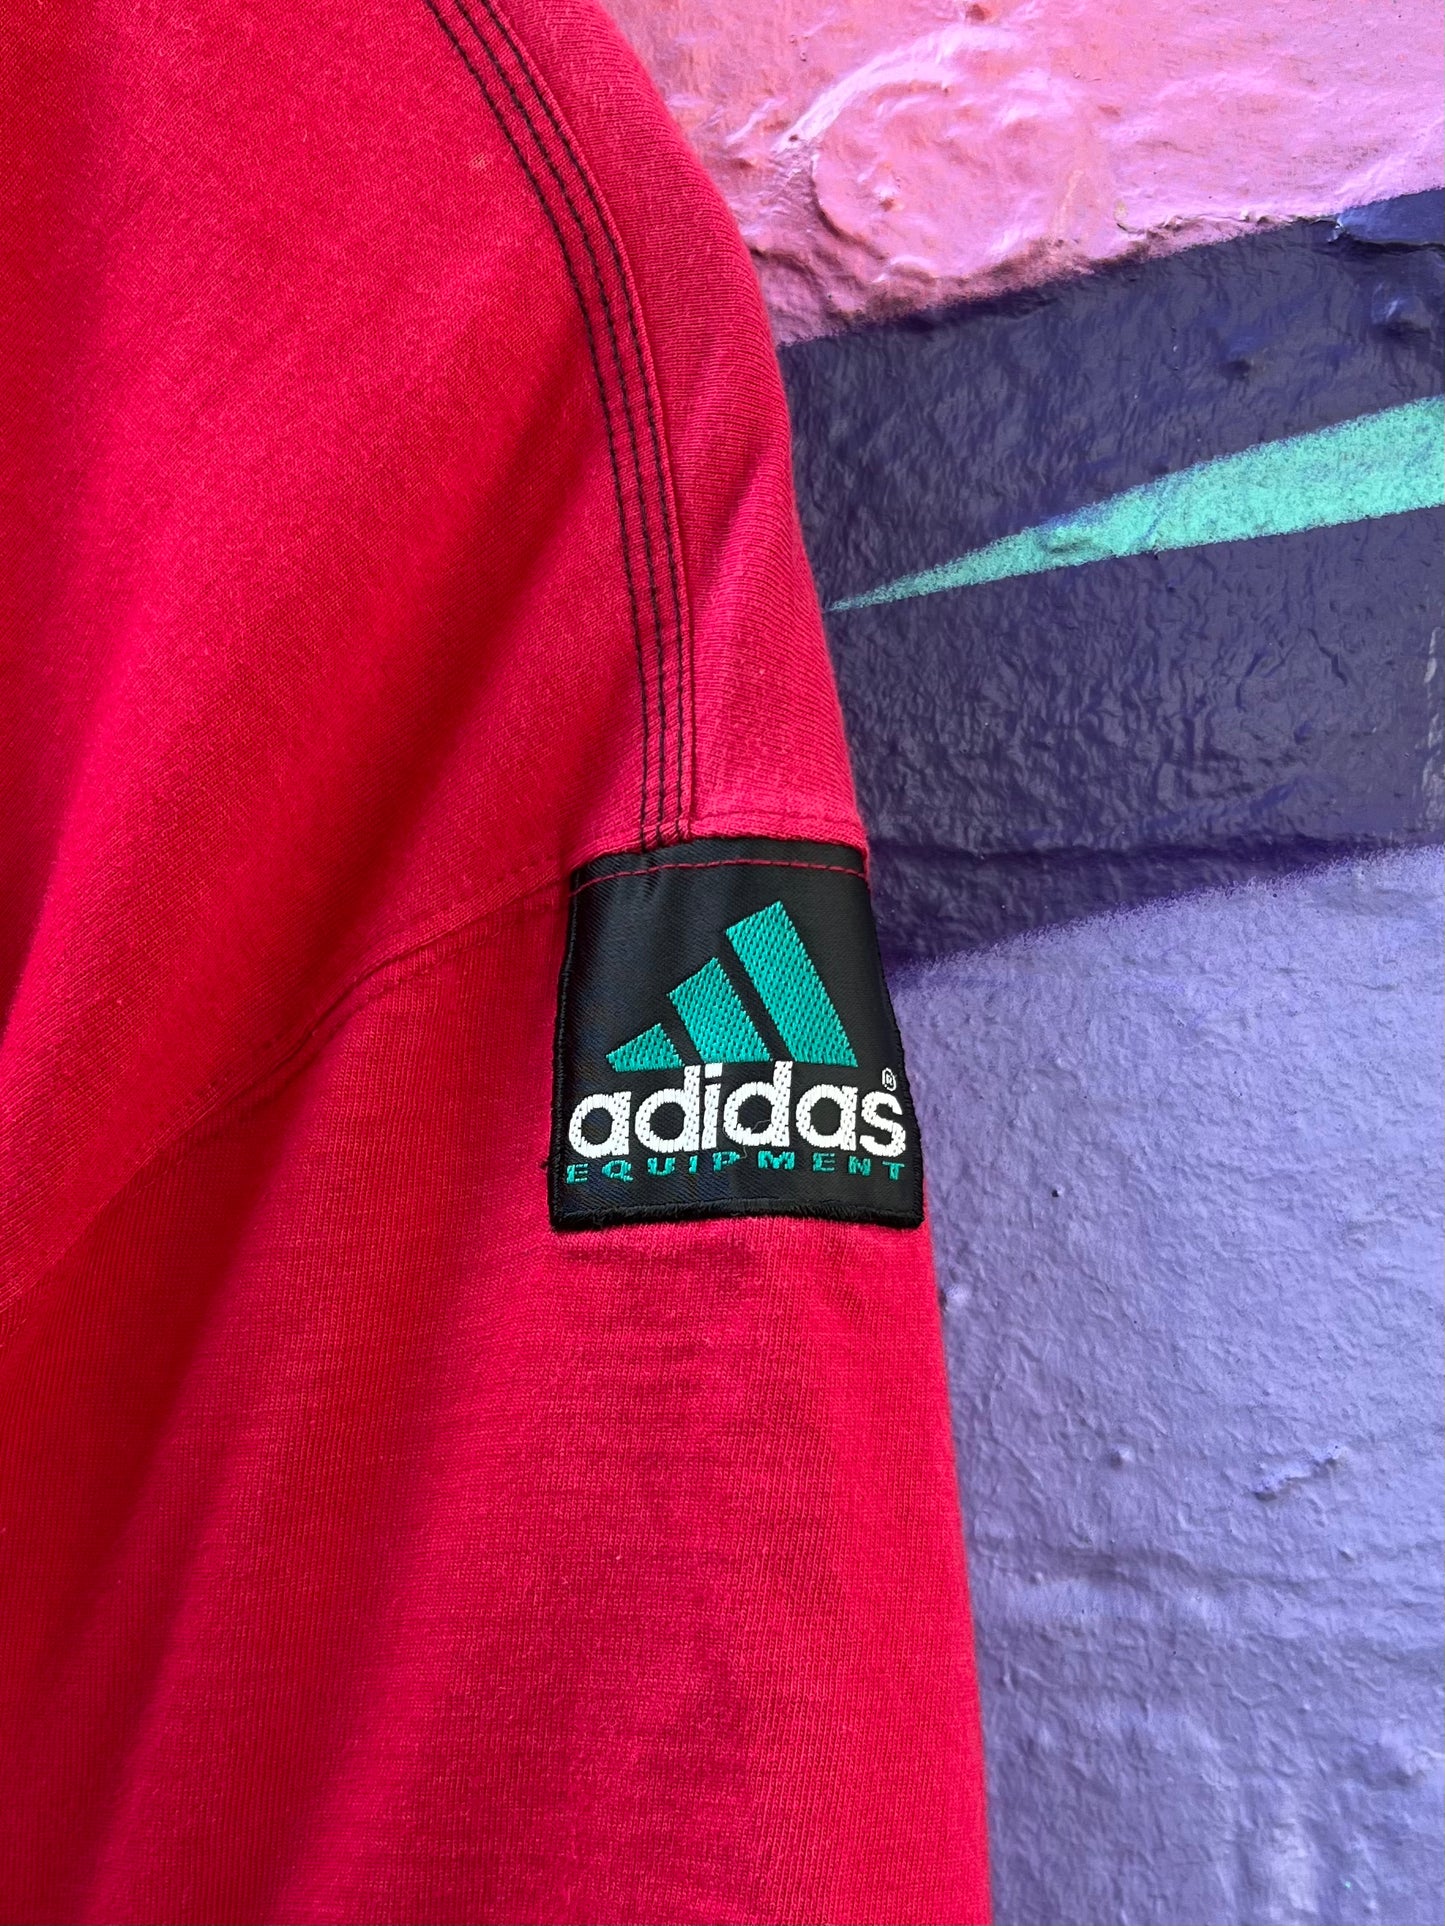 M - Adidas Equipment Big Logo Red